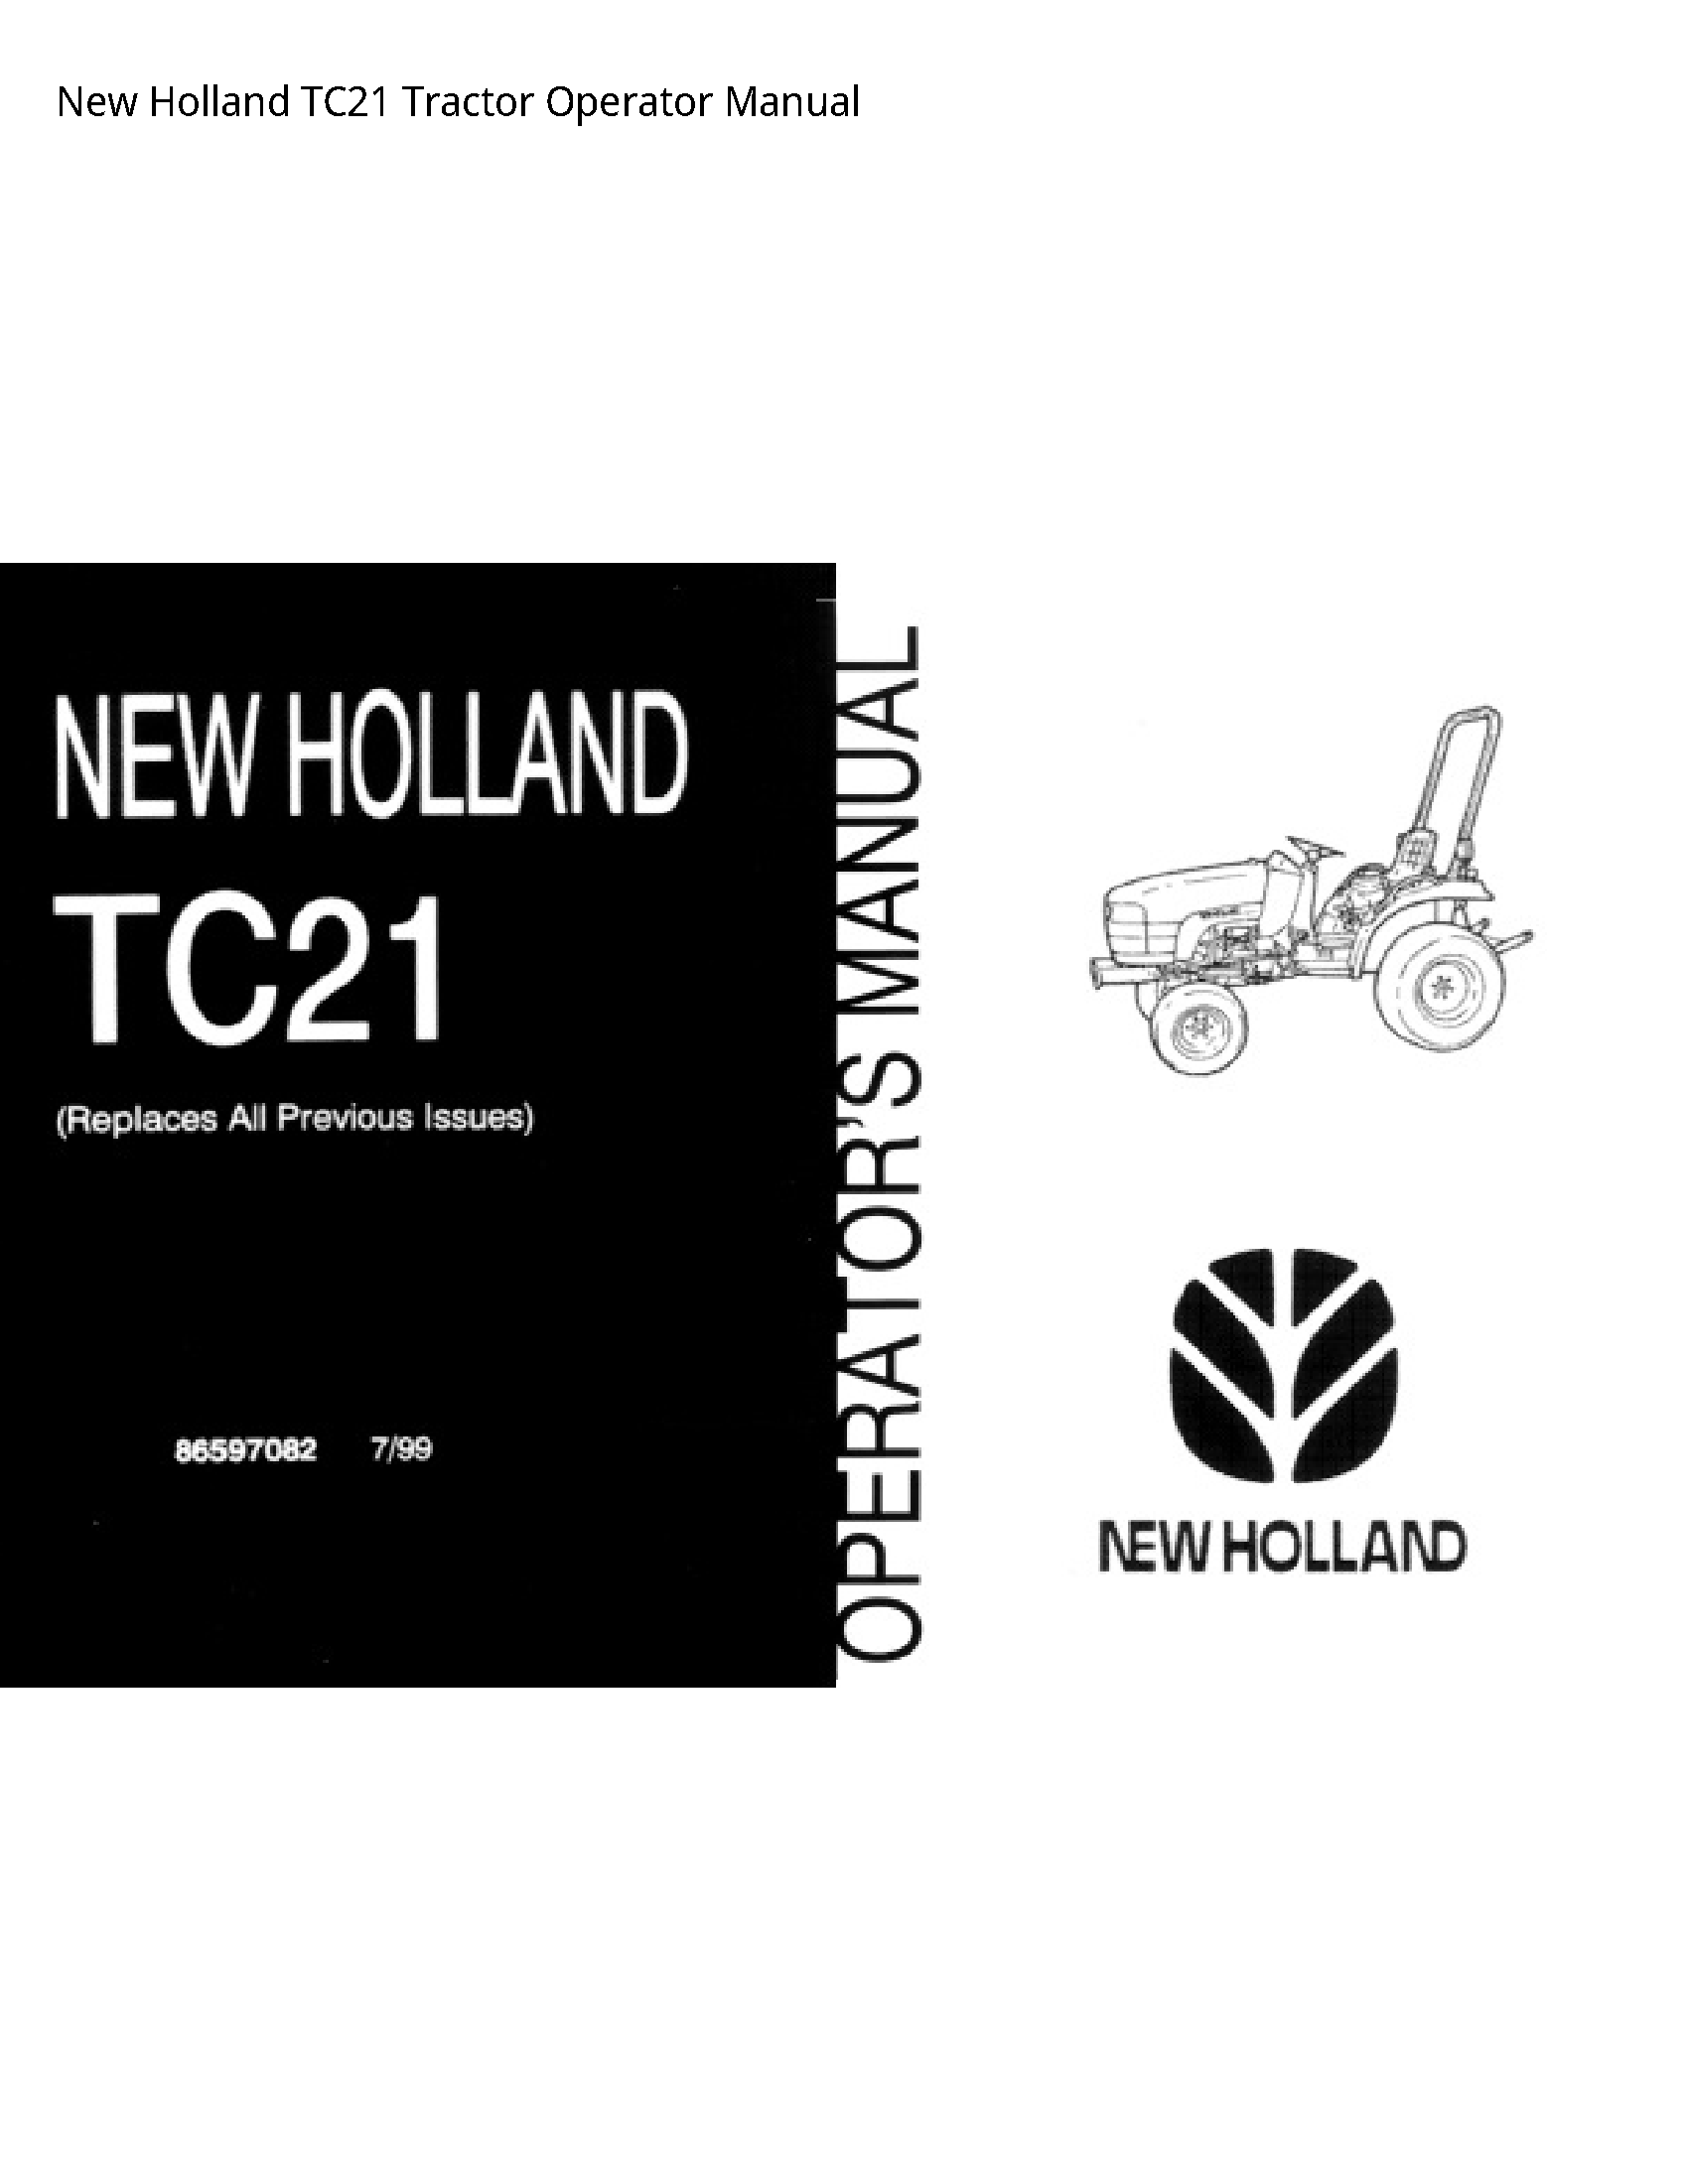 New Holland TC21 Tractor Operator manual